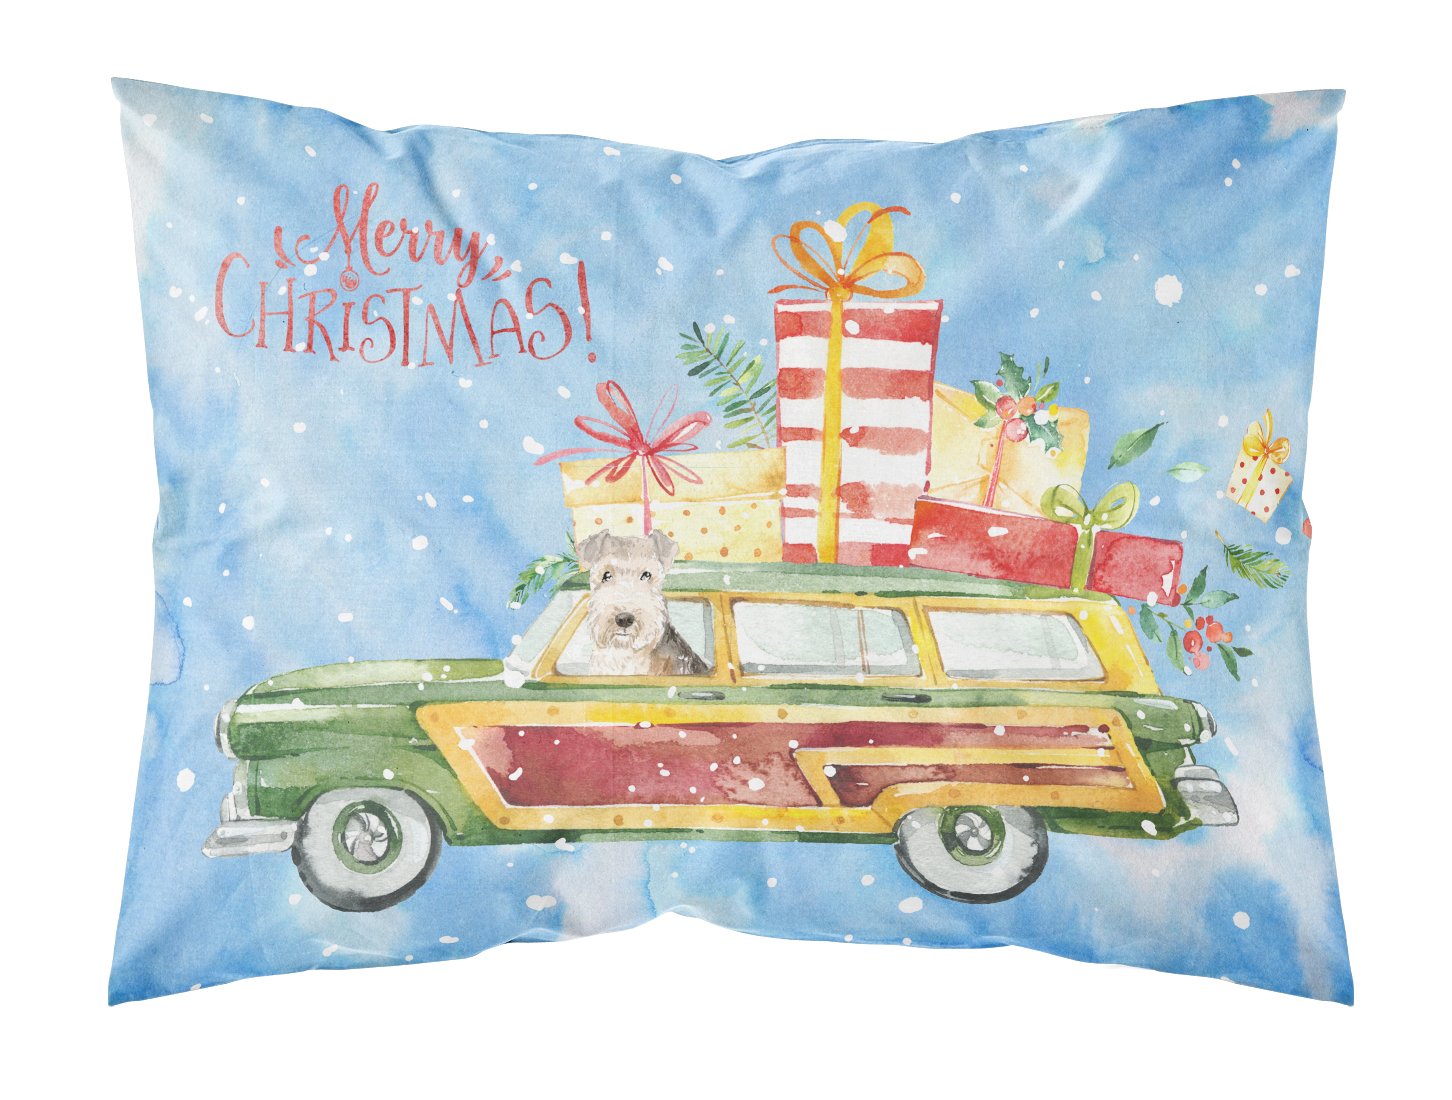 Merry Christmas Lakeland Terrier Fabric Standard Pillowcase CK2412PILLOWCASE by Caroline's Treasures